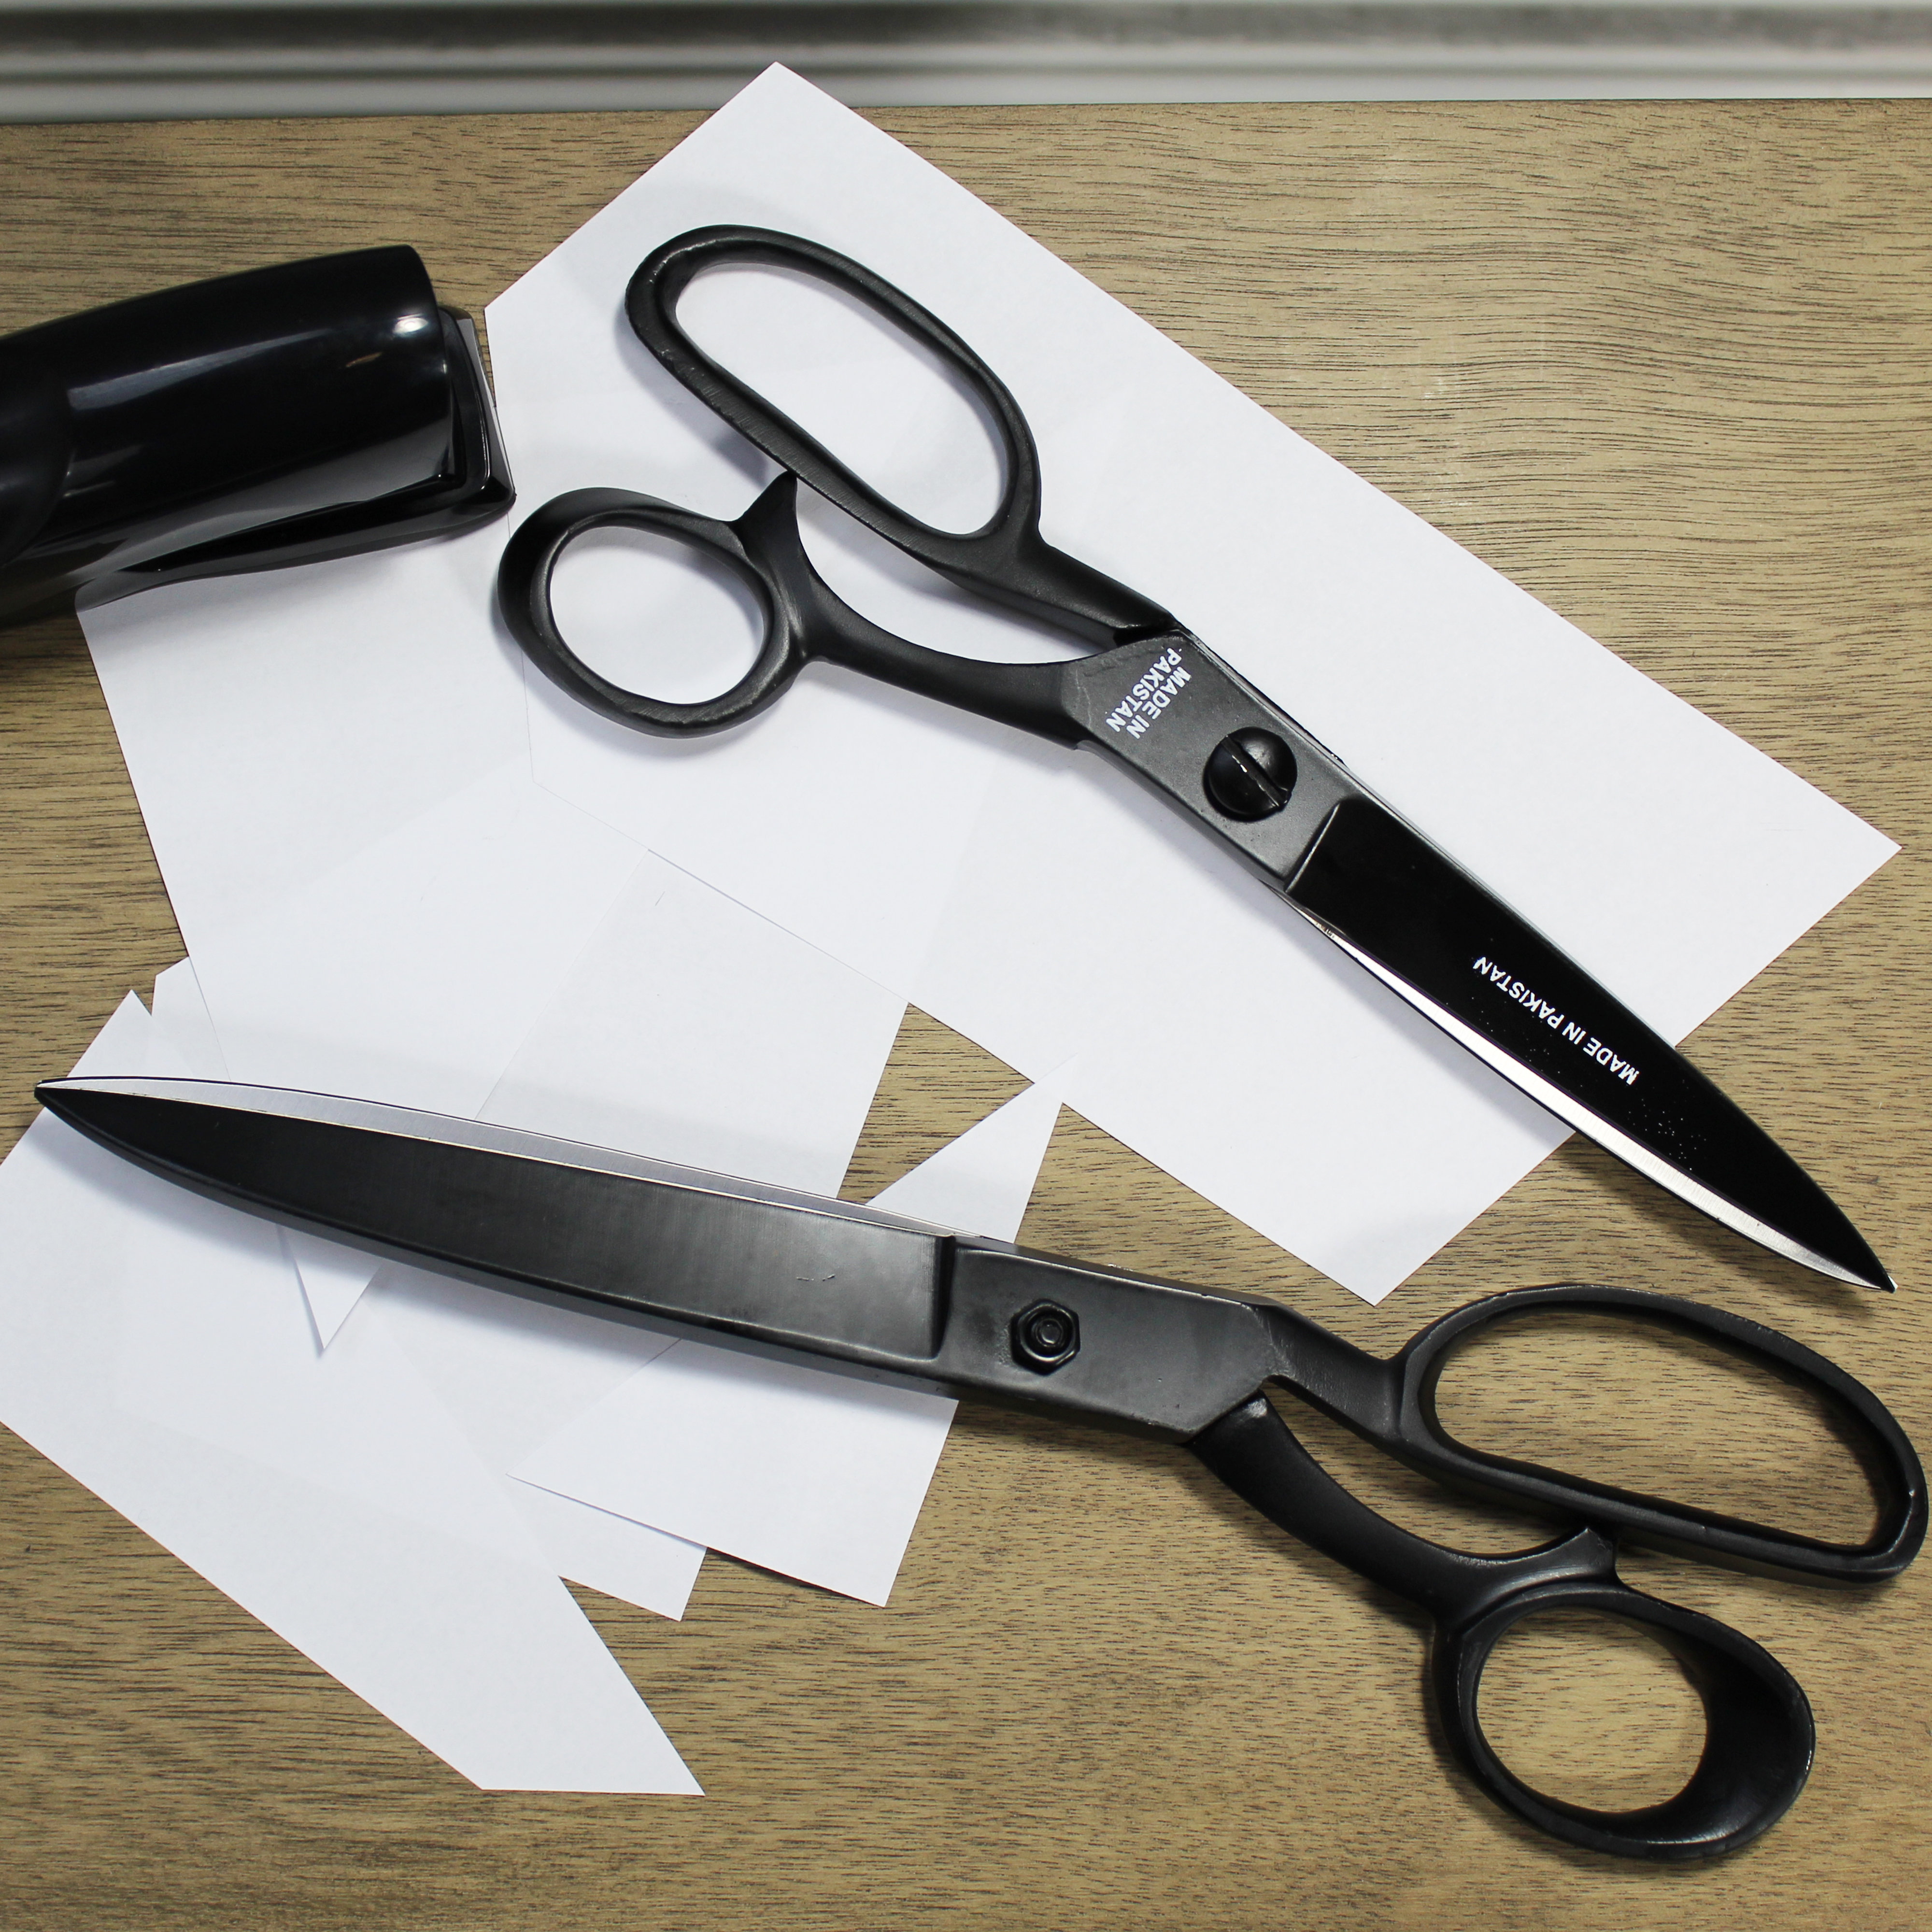 Deiss Pro Kitchen Shears - All Purpose Safe Heavy Duty Kitchen Scissors &  Reviews